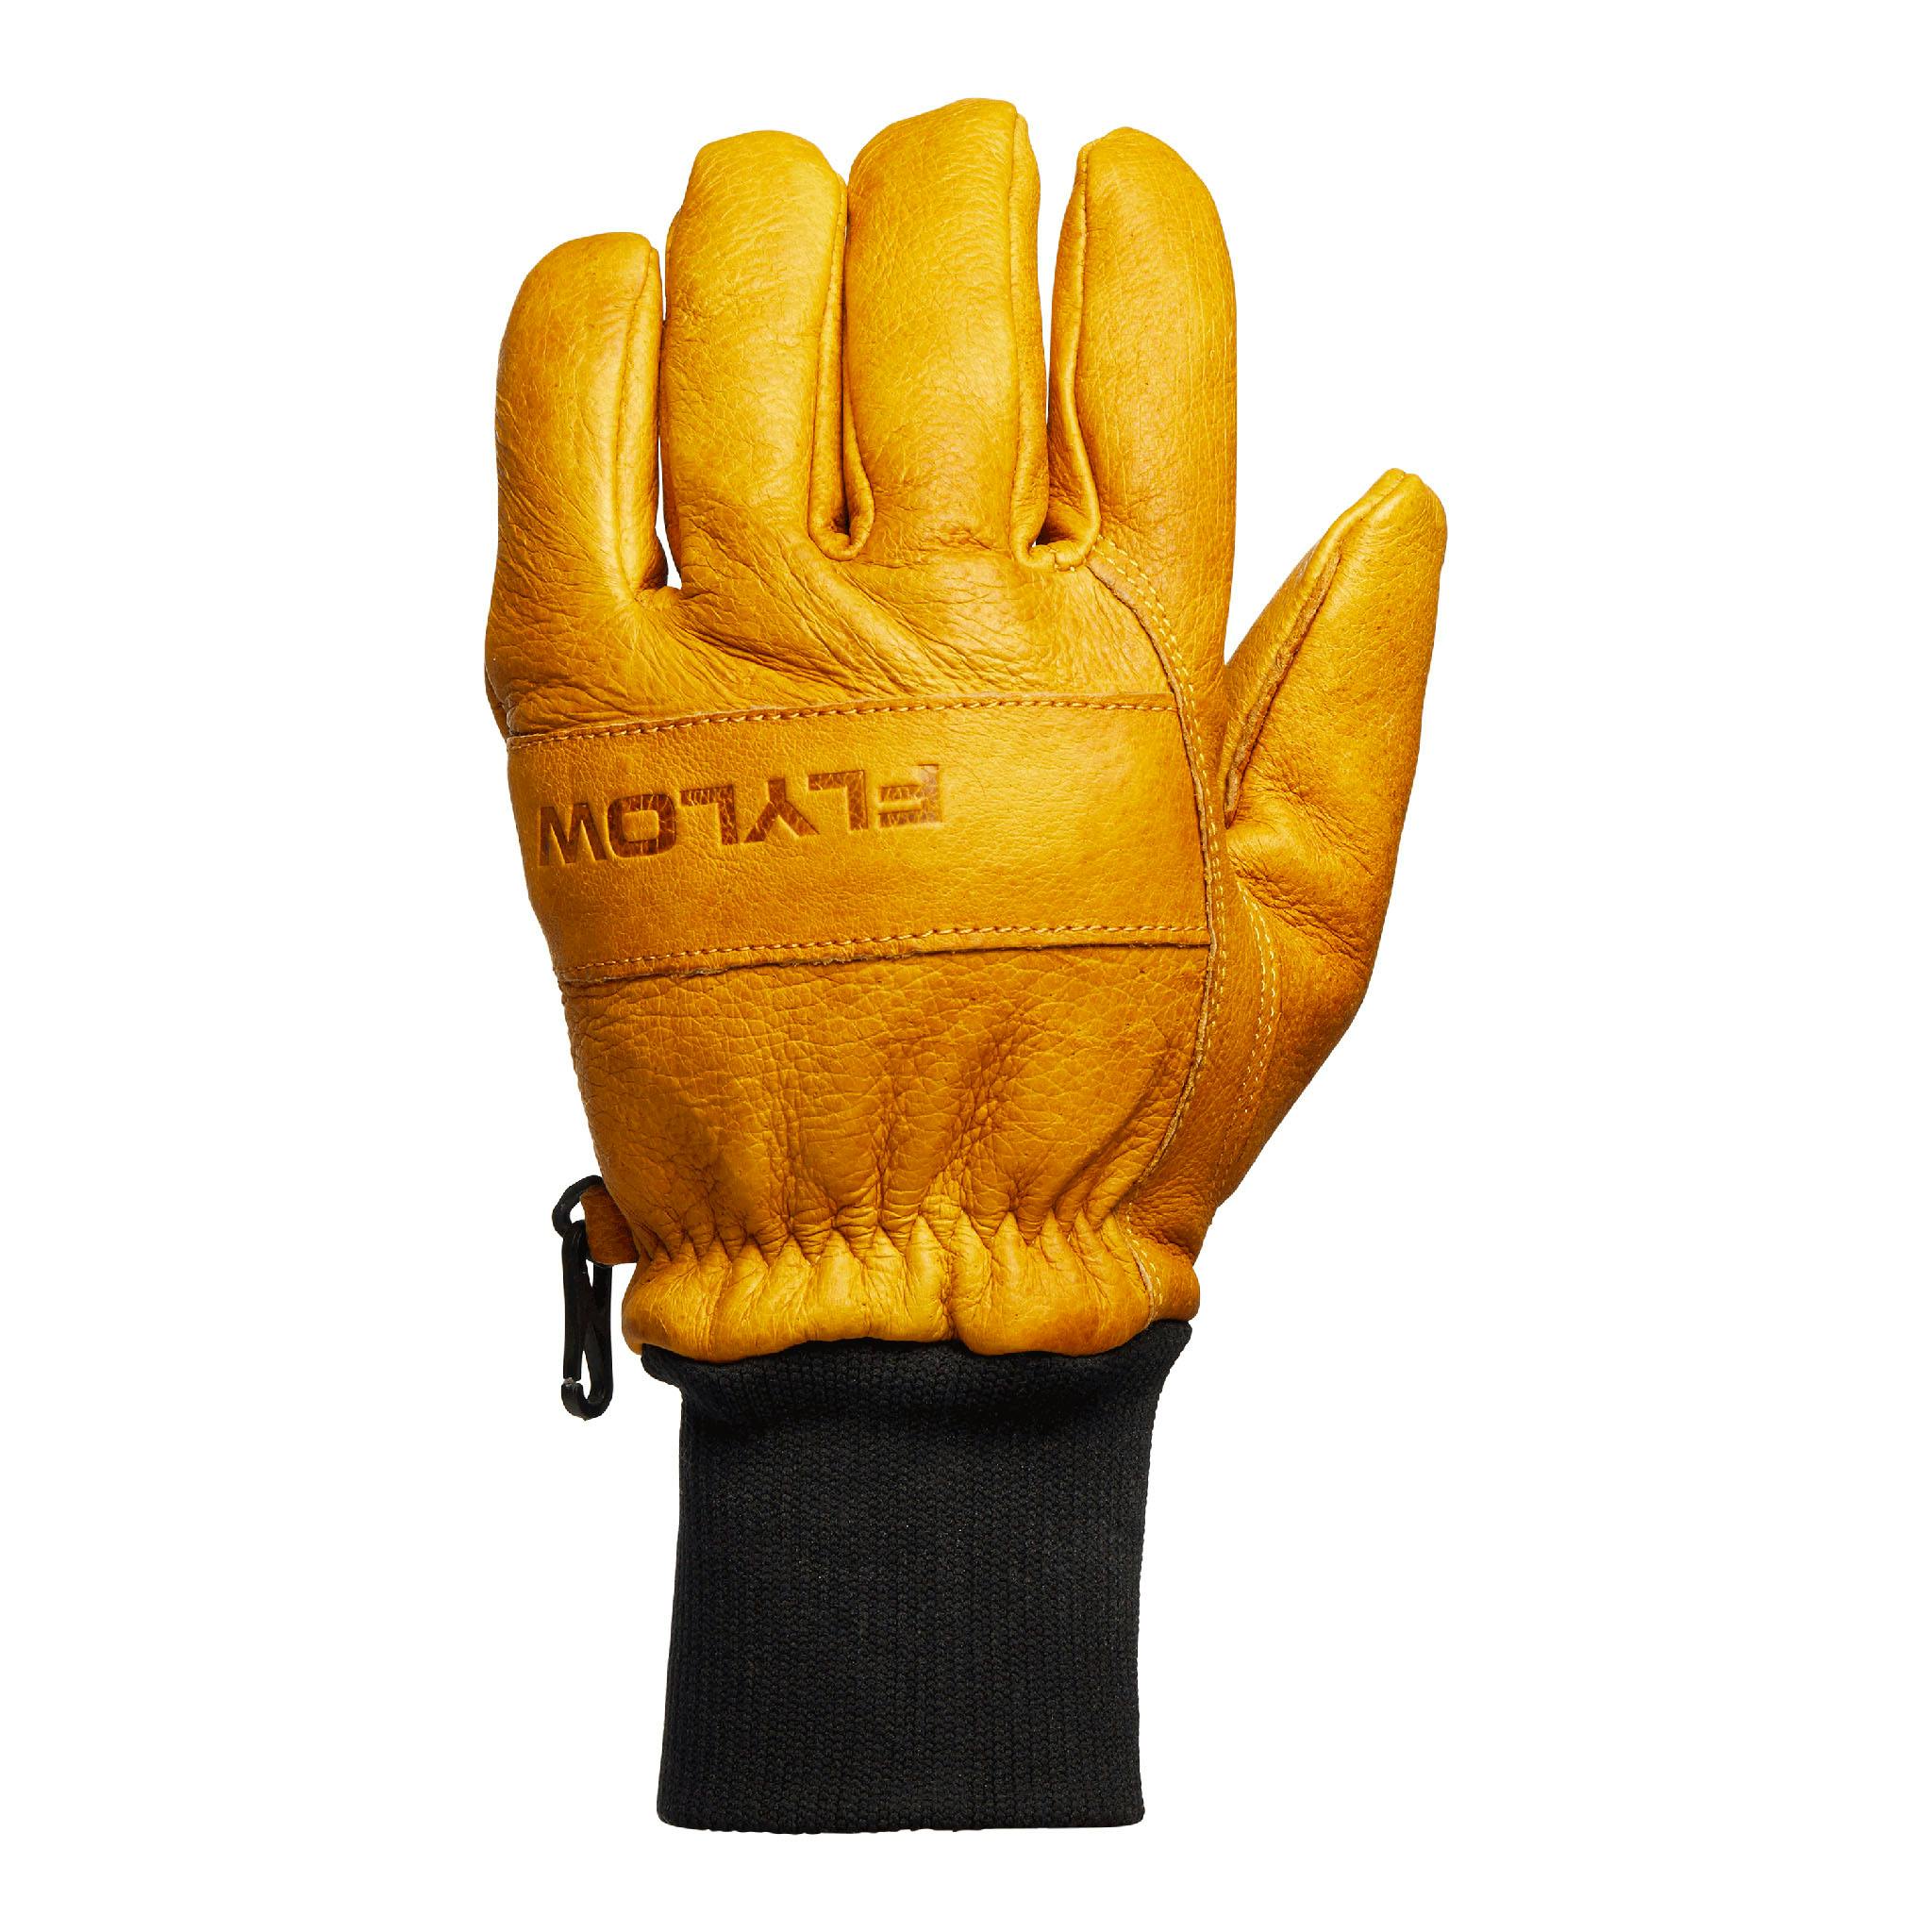 Flylow Ridge Gloves